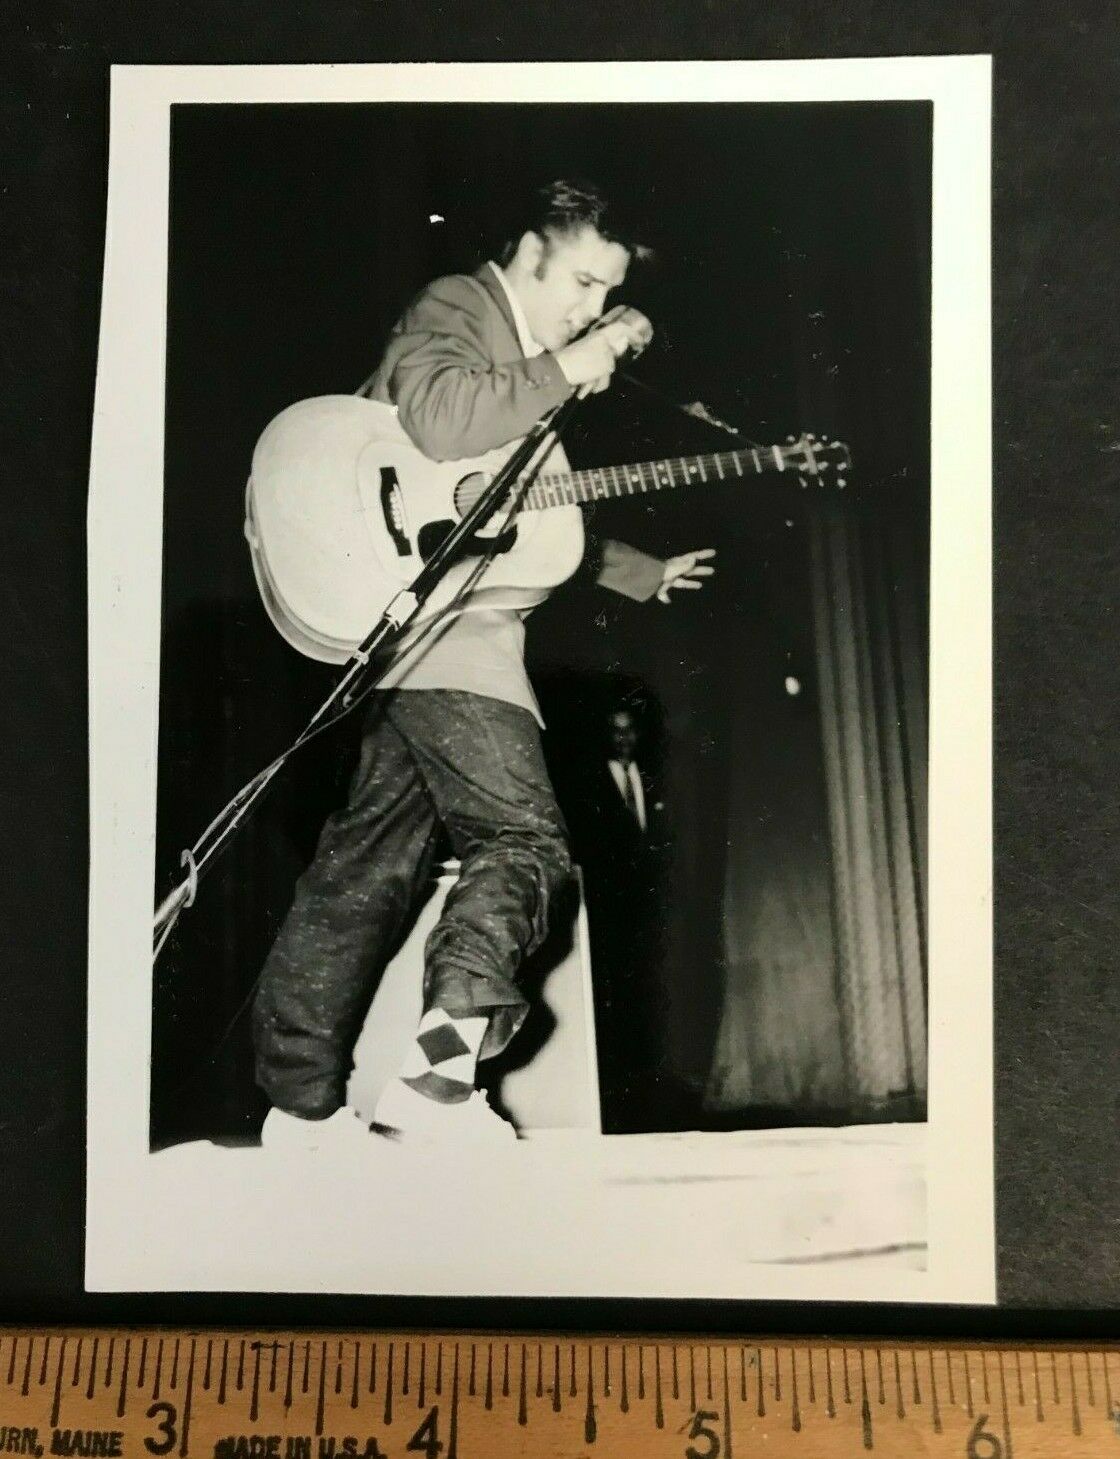 1956 Rare Original 4x5" Photo #4 Elvis Presley On Stage Dancing Great Cond!